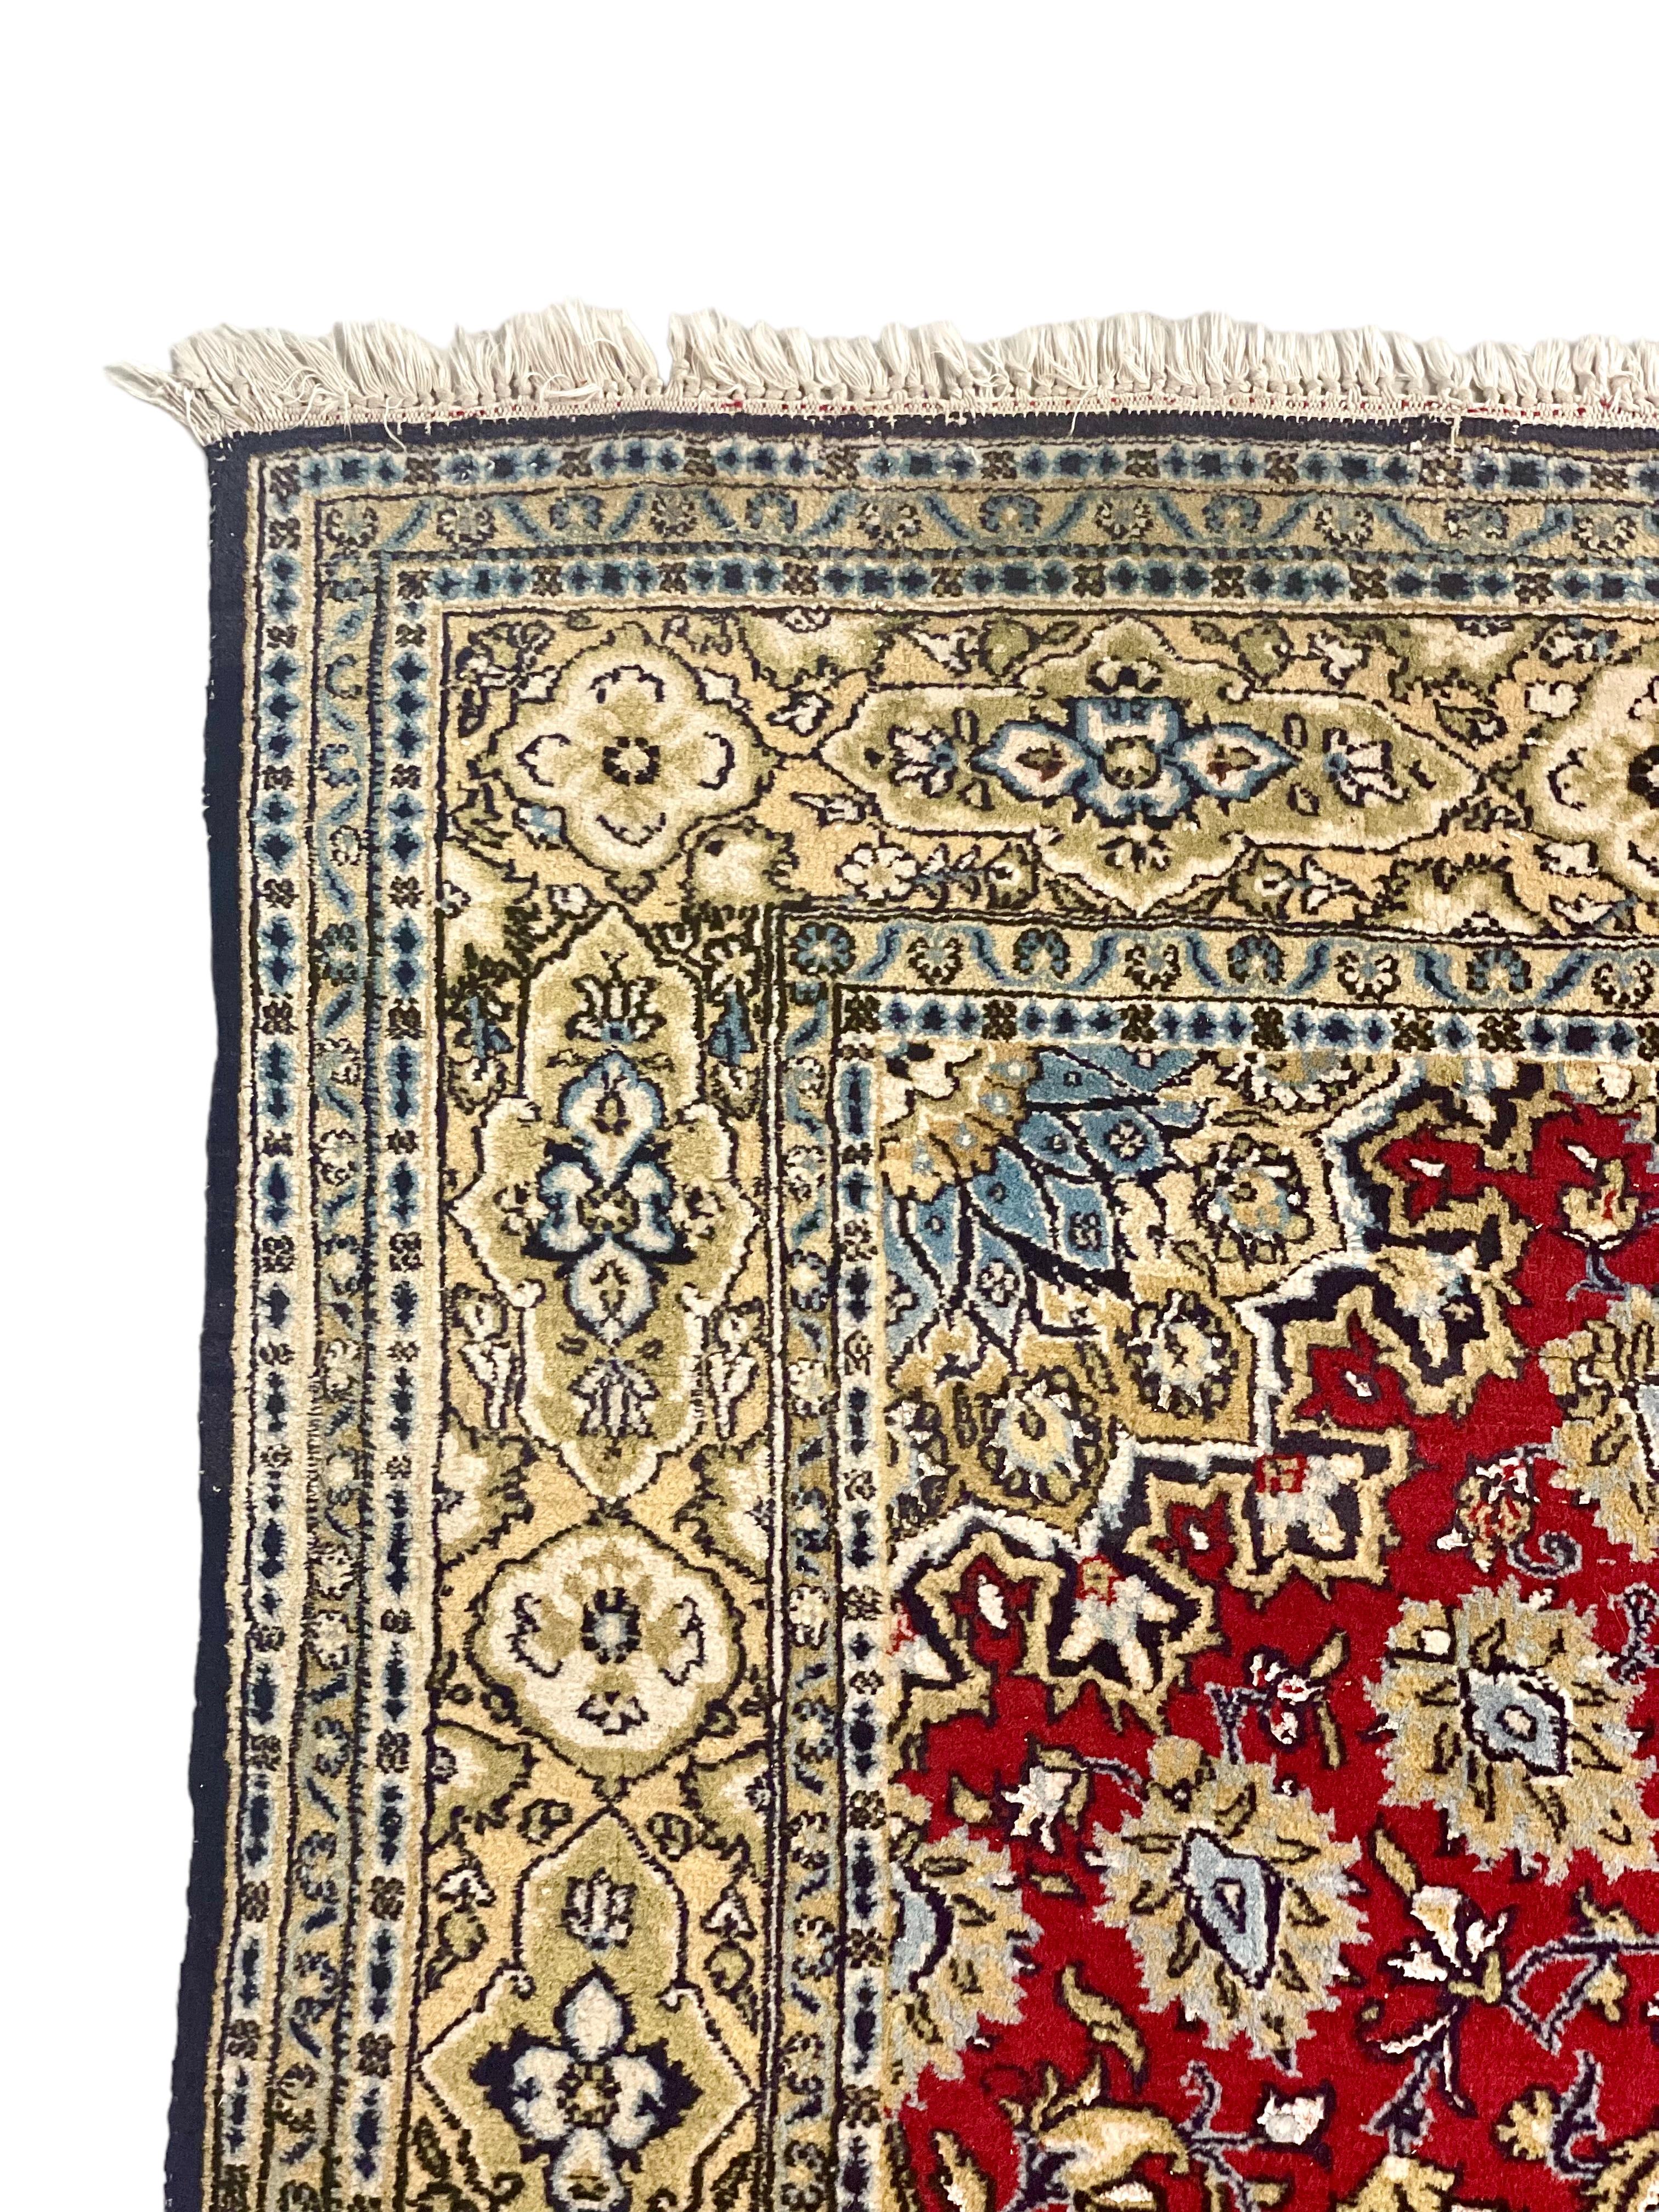 Hand-Woven Antique Persian Qum Rug with Medallion Design